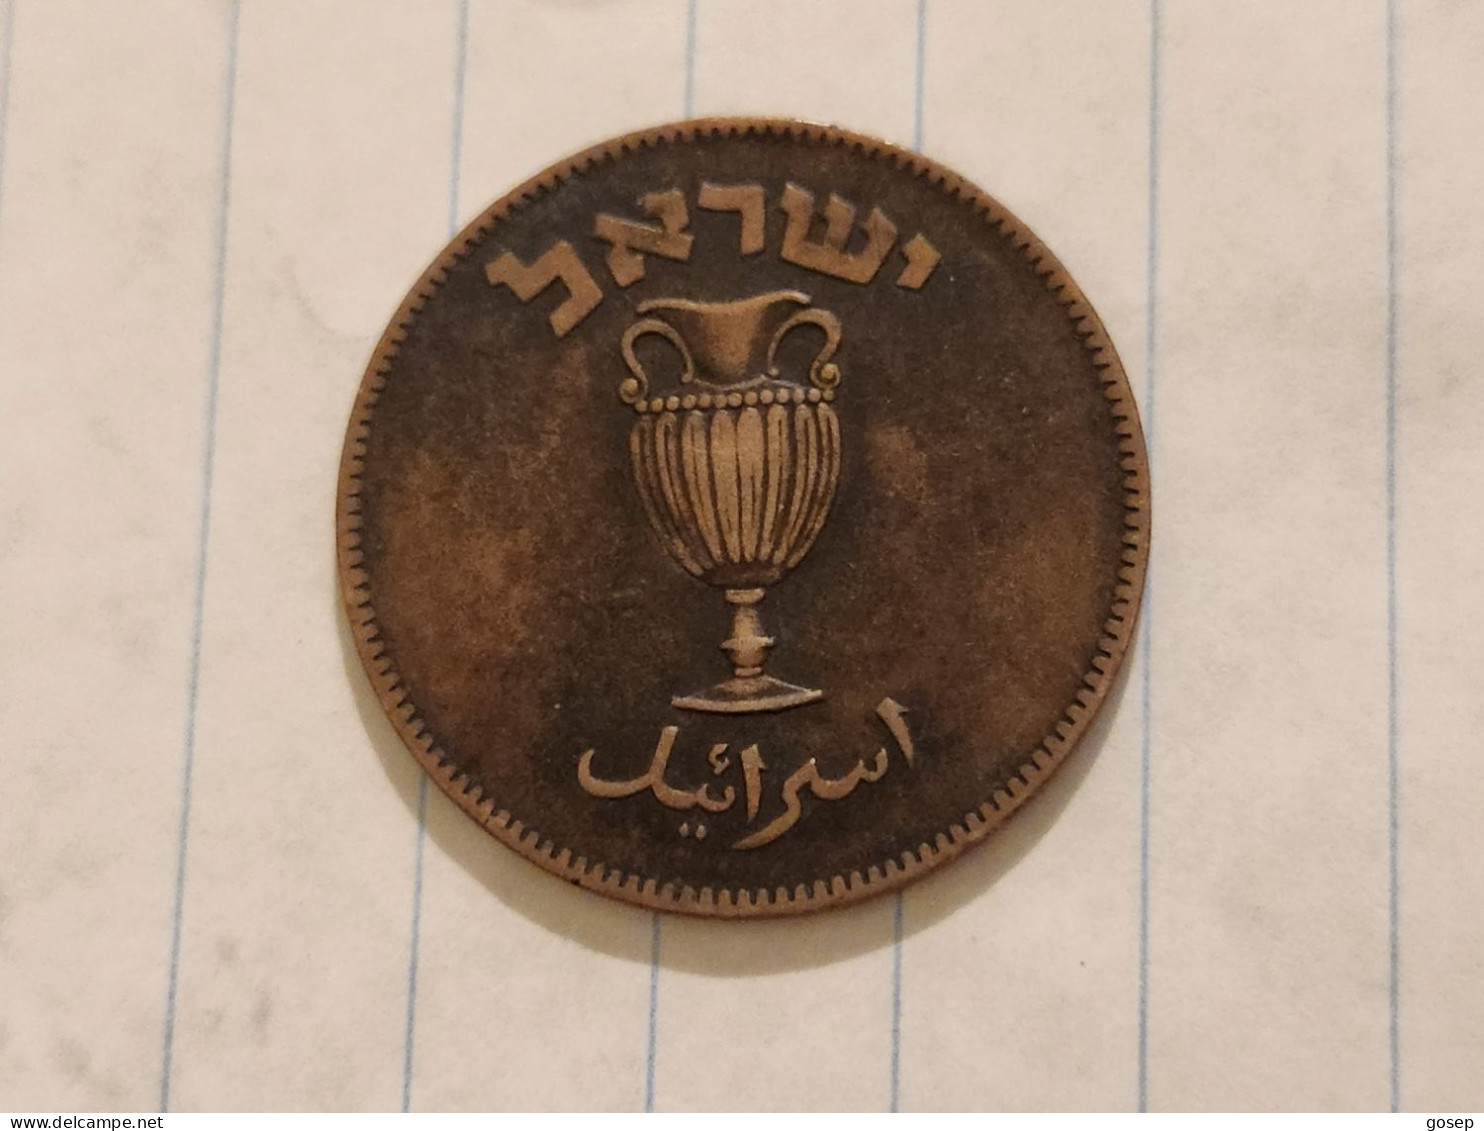 Israel-Coins-(1948-1957)-10 PRUTA-Hapanka 11-(1949)-(5)-תש"ט-good - Israel